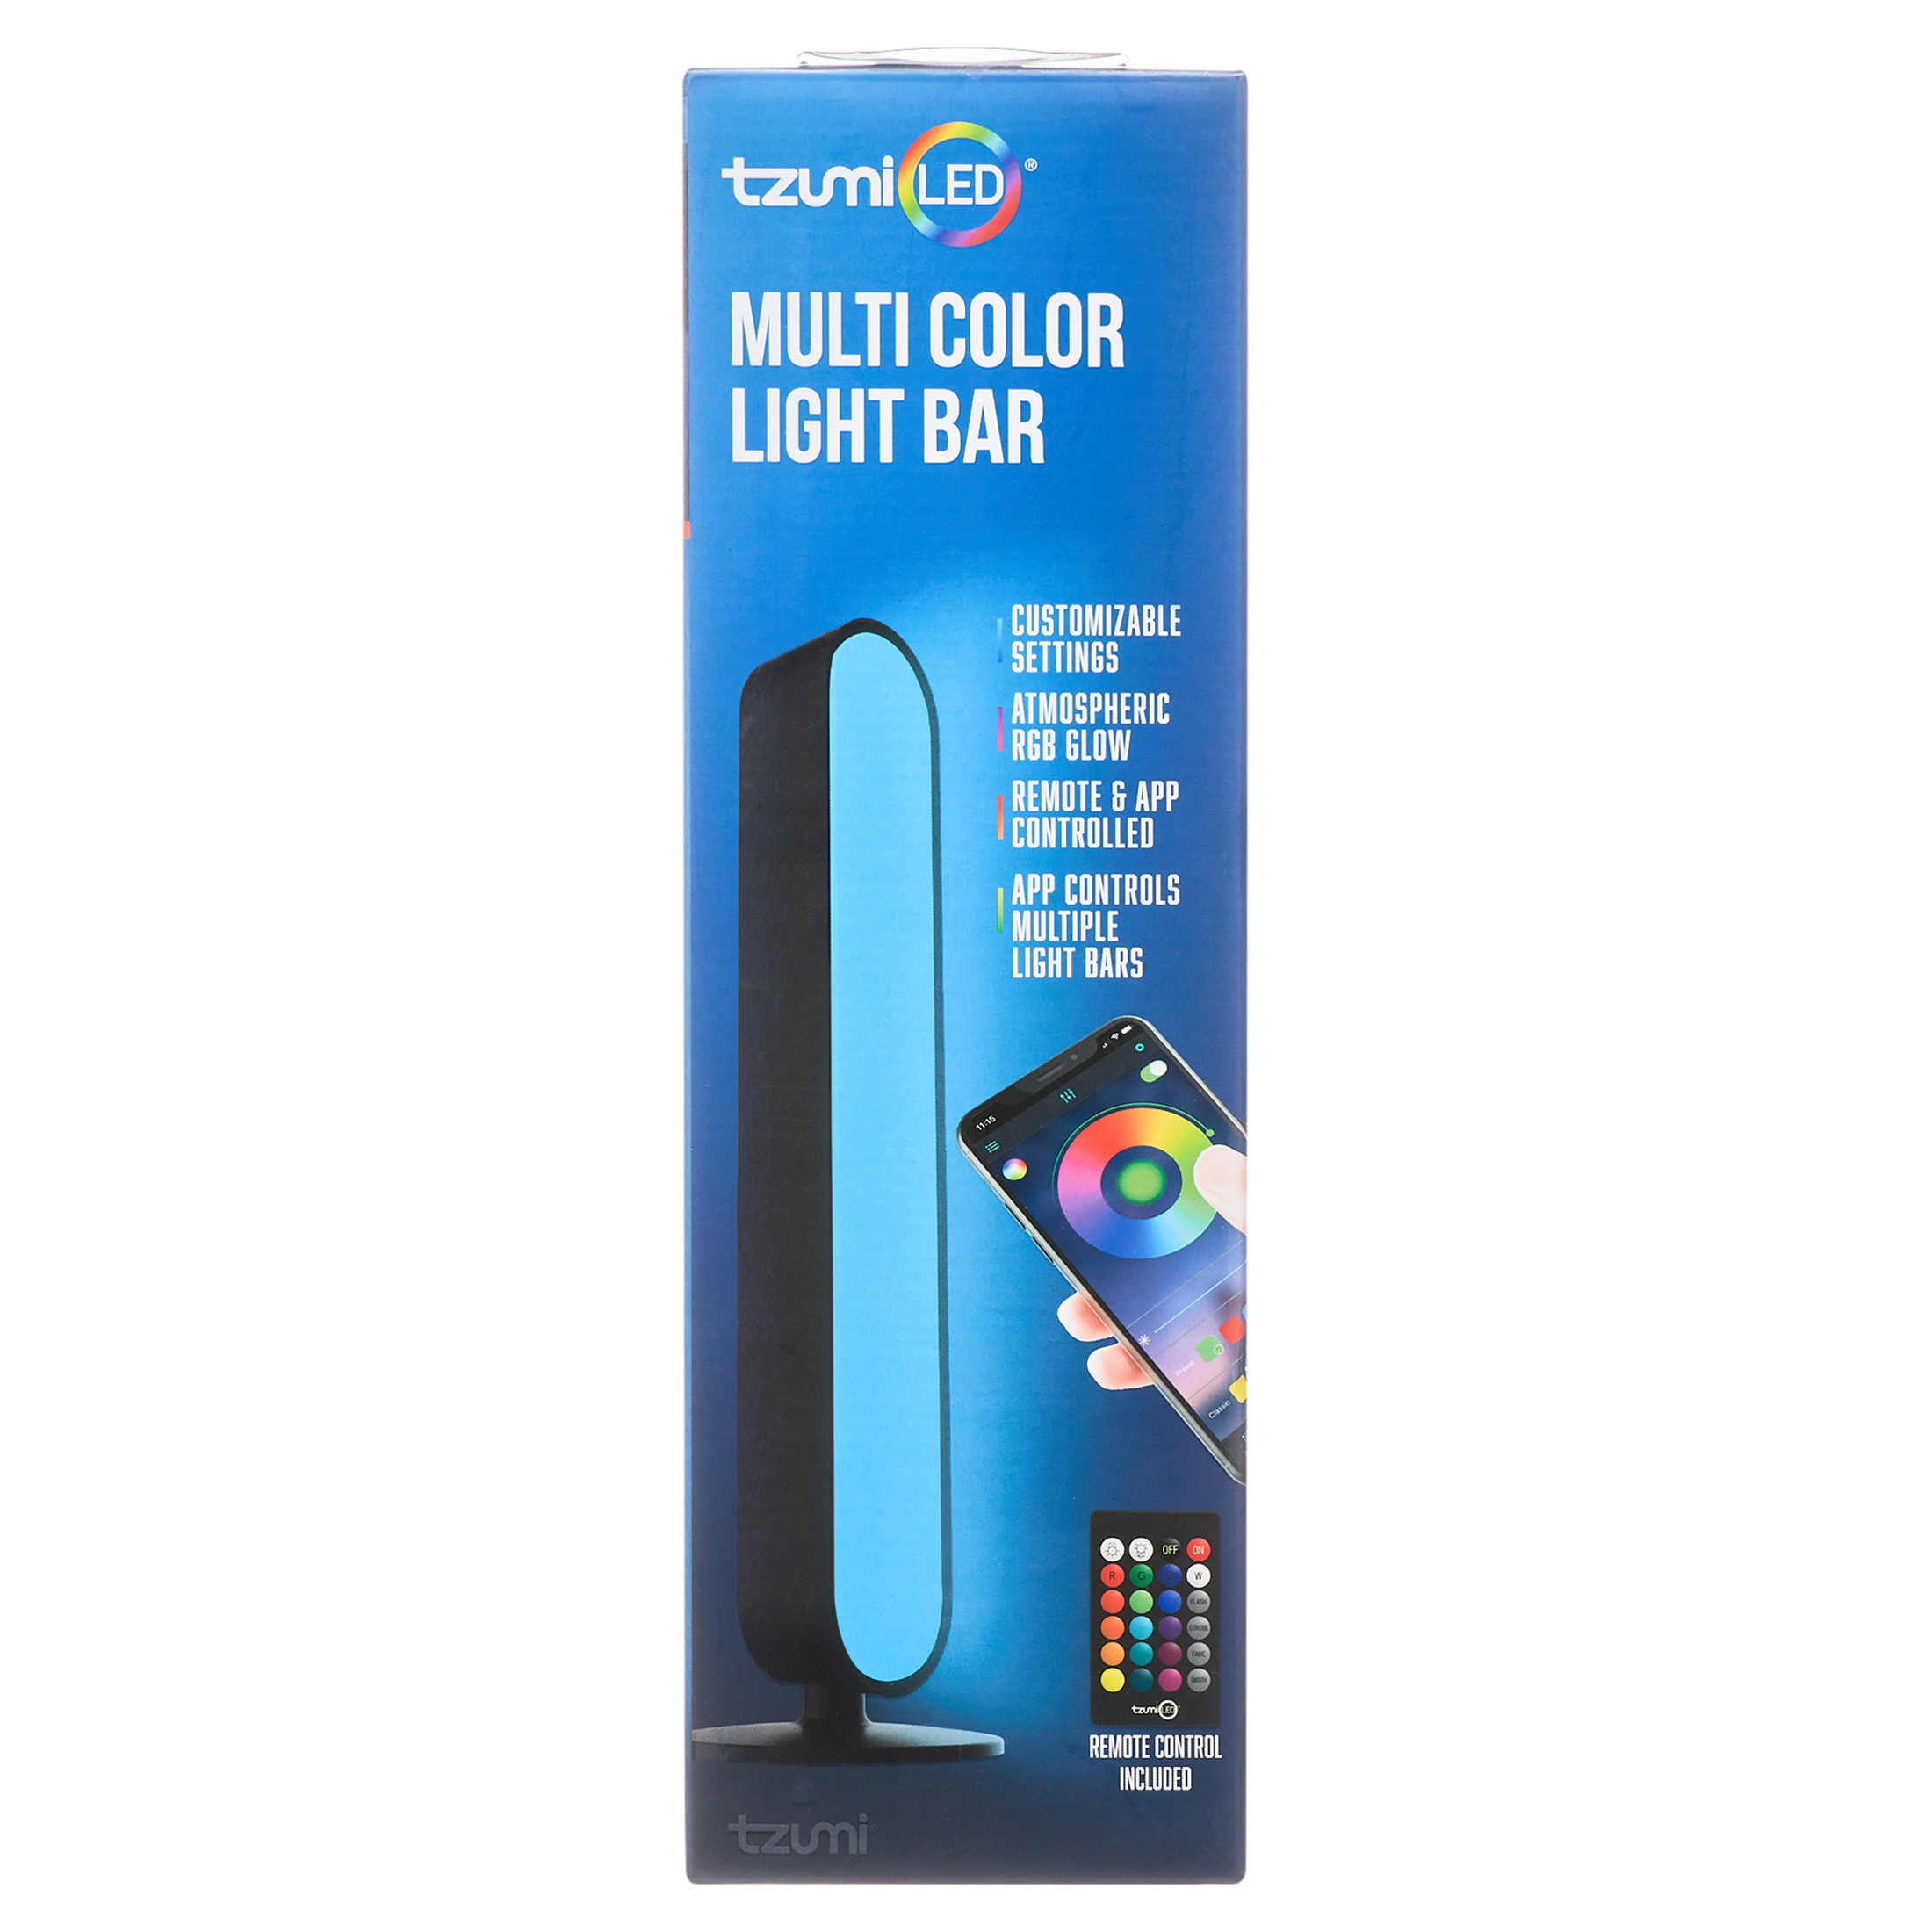 auraLED Multicolor Remote/App Controlled LED Light Bar - image 1 of 15